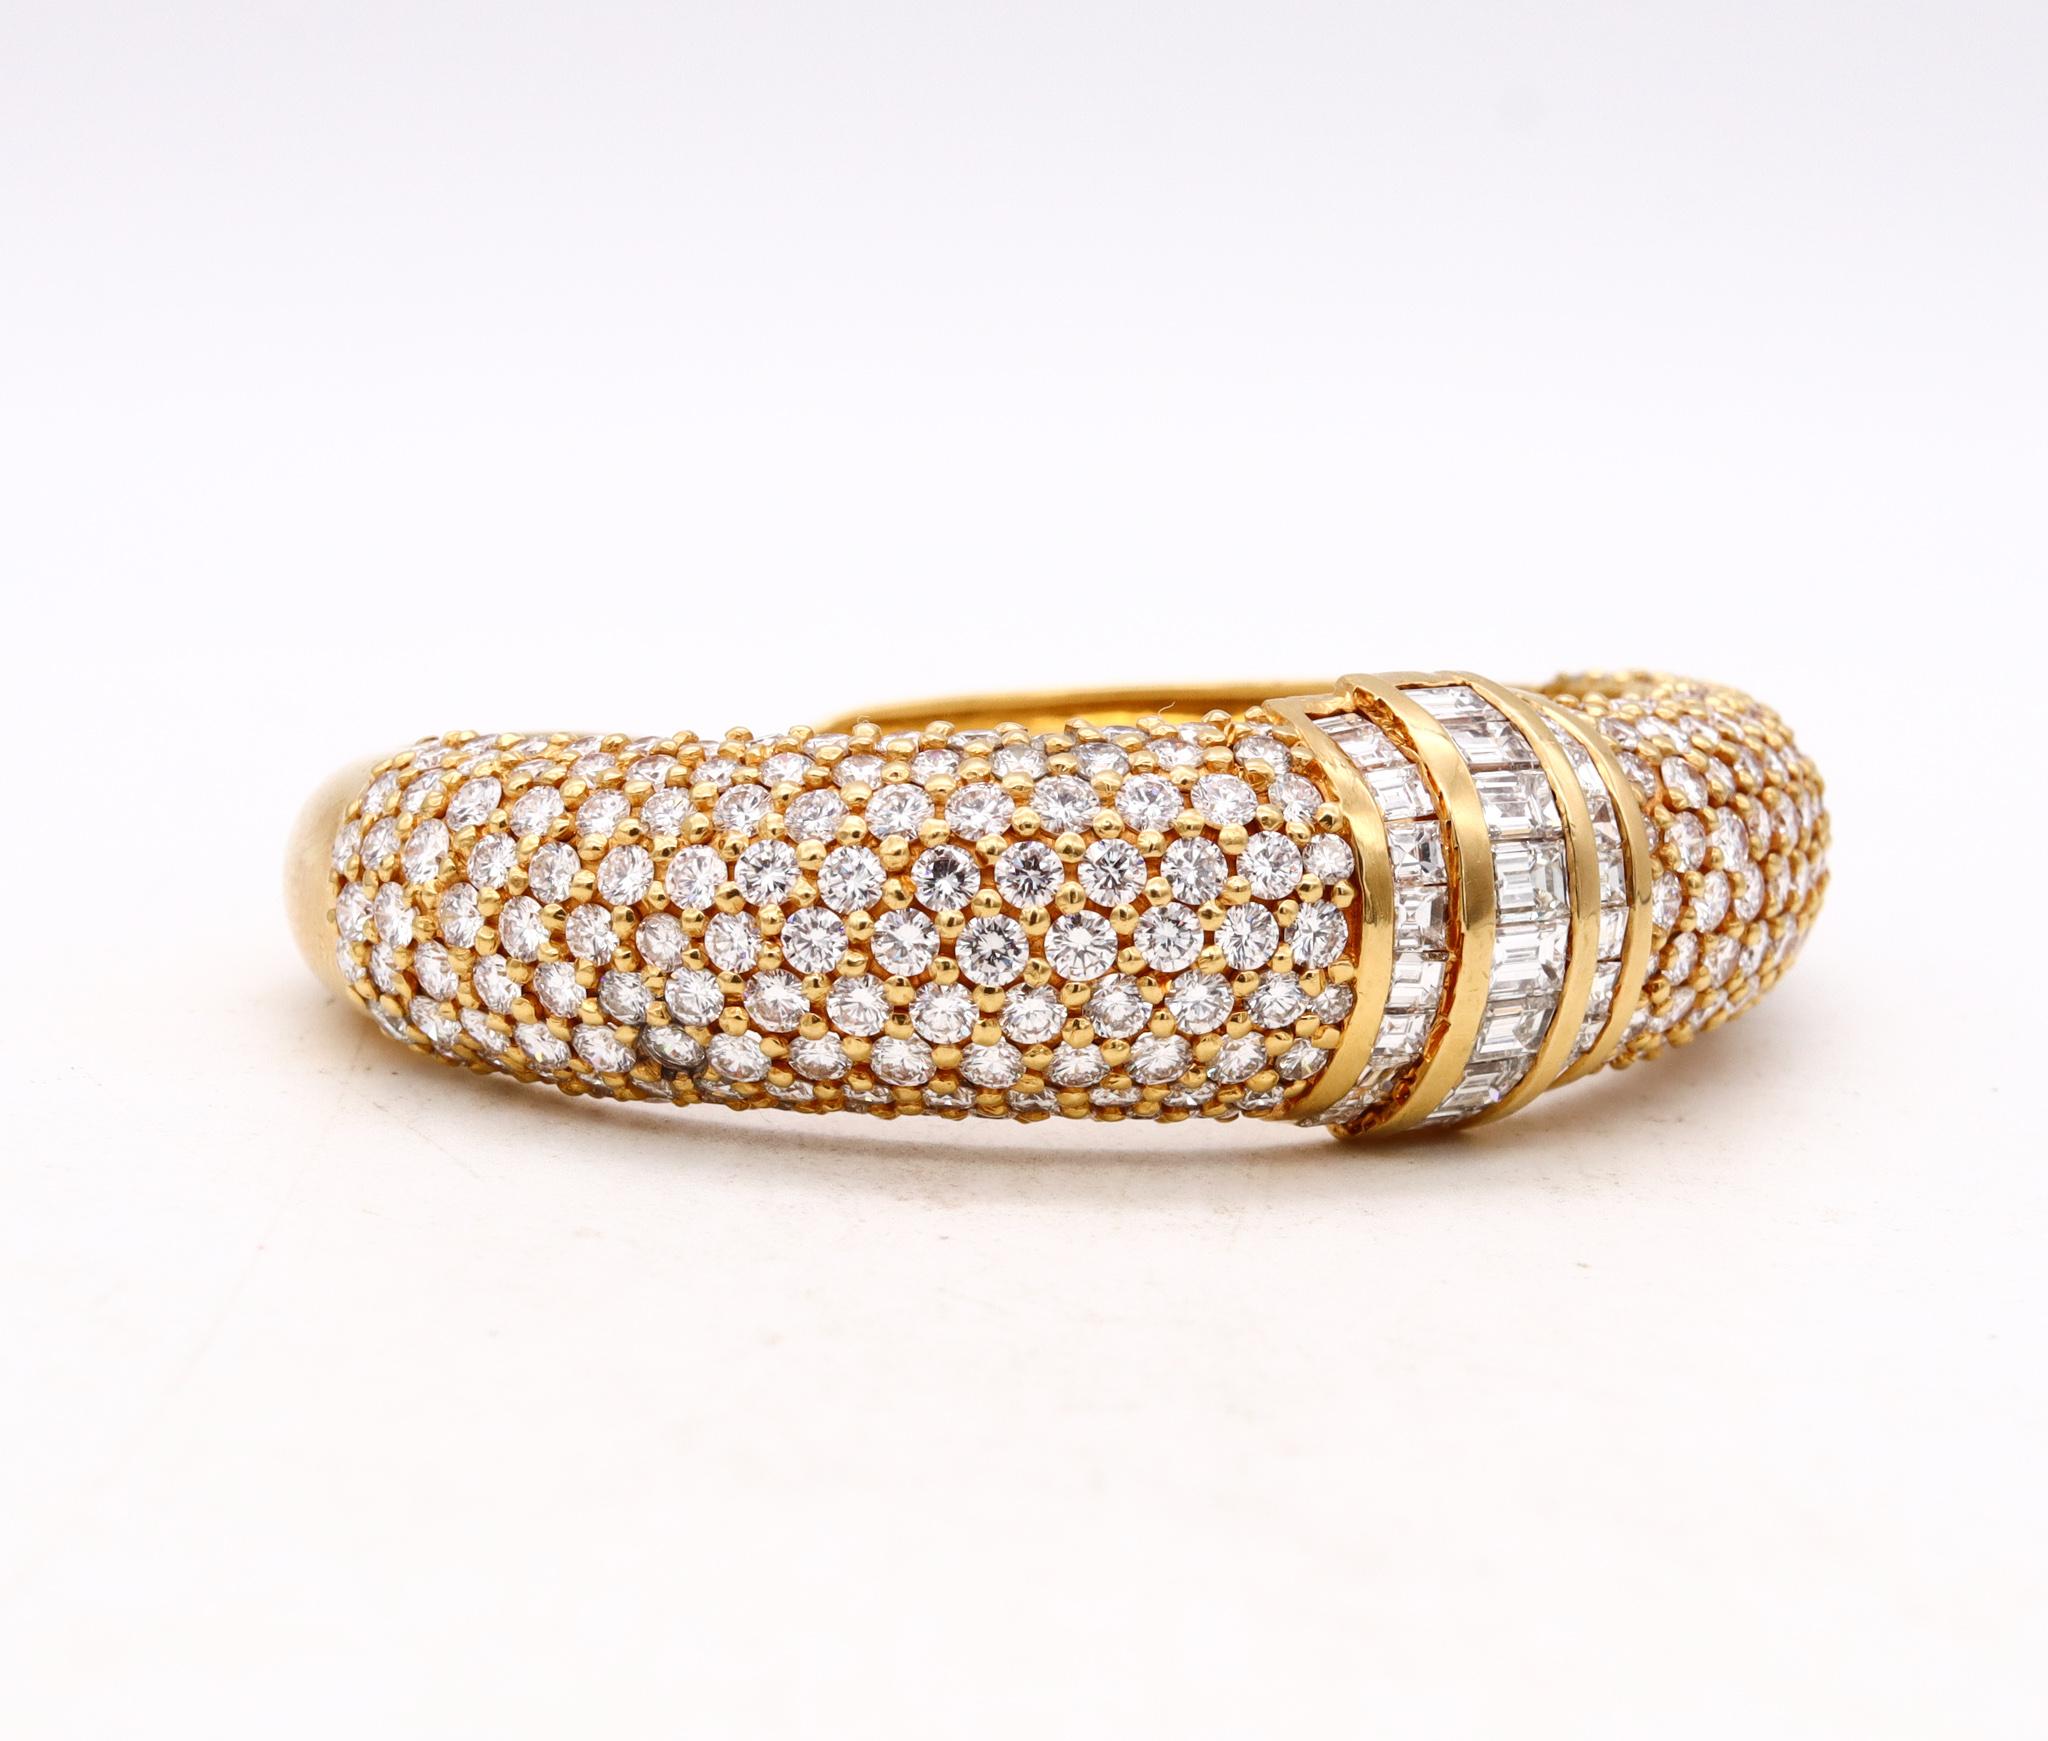 Exceptional Italian Designer Modern Bracelet in 18Kt Gold 21.12 Cts VS Diamonds For Sale 1